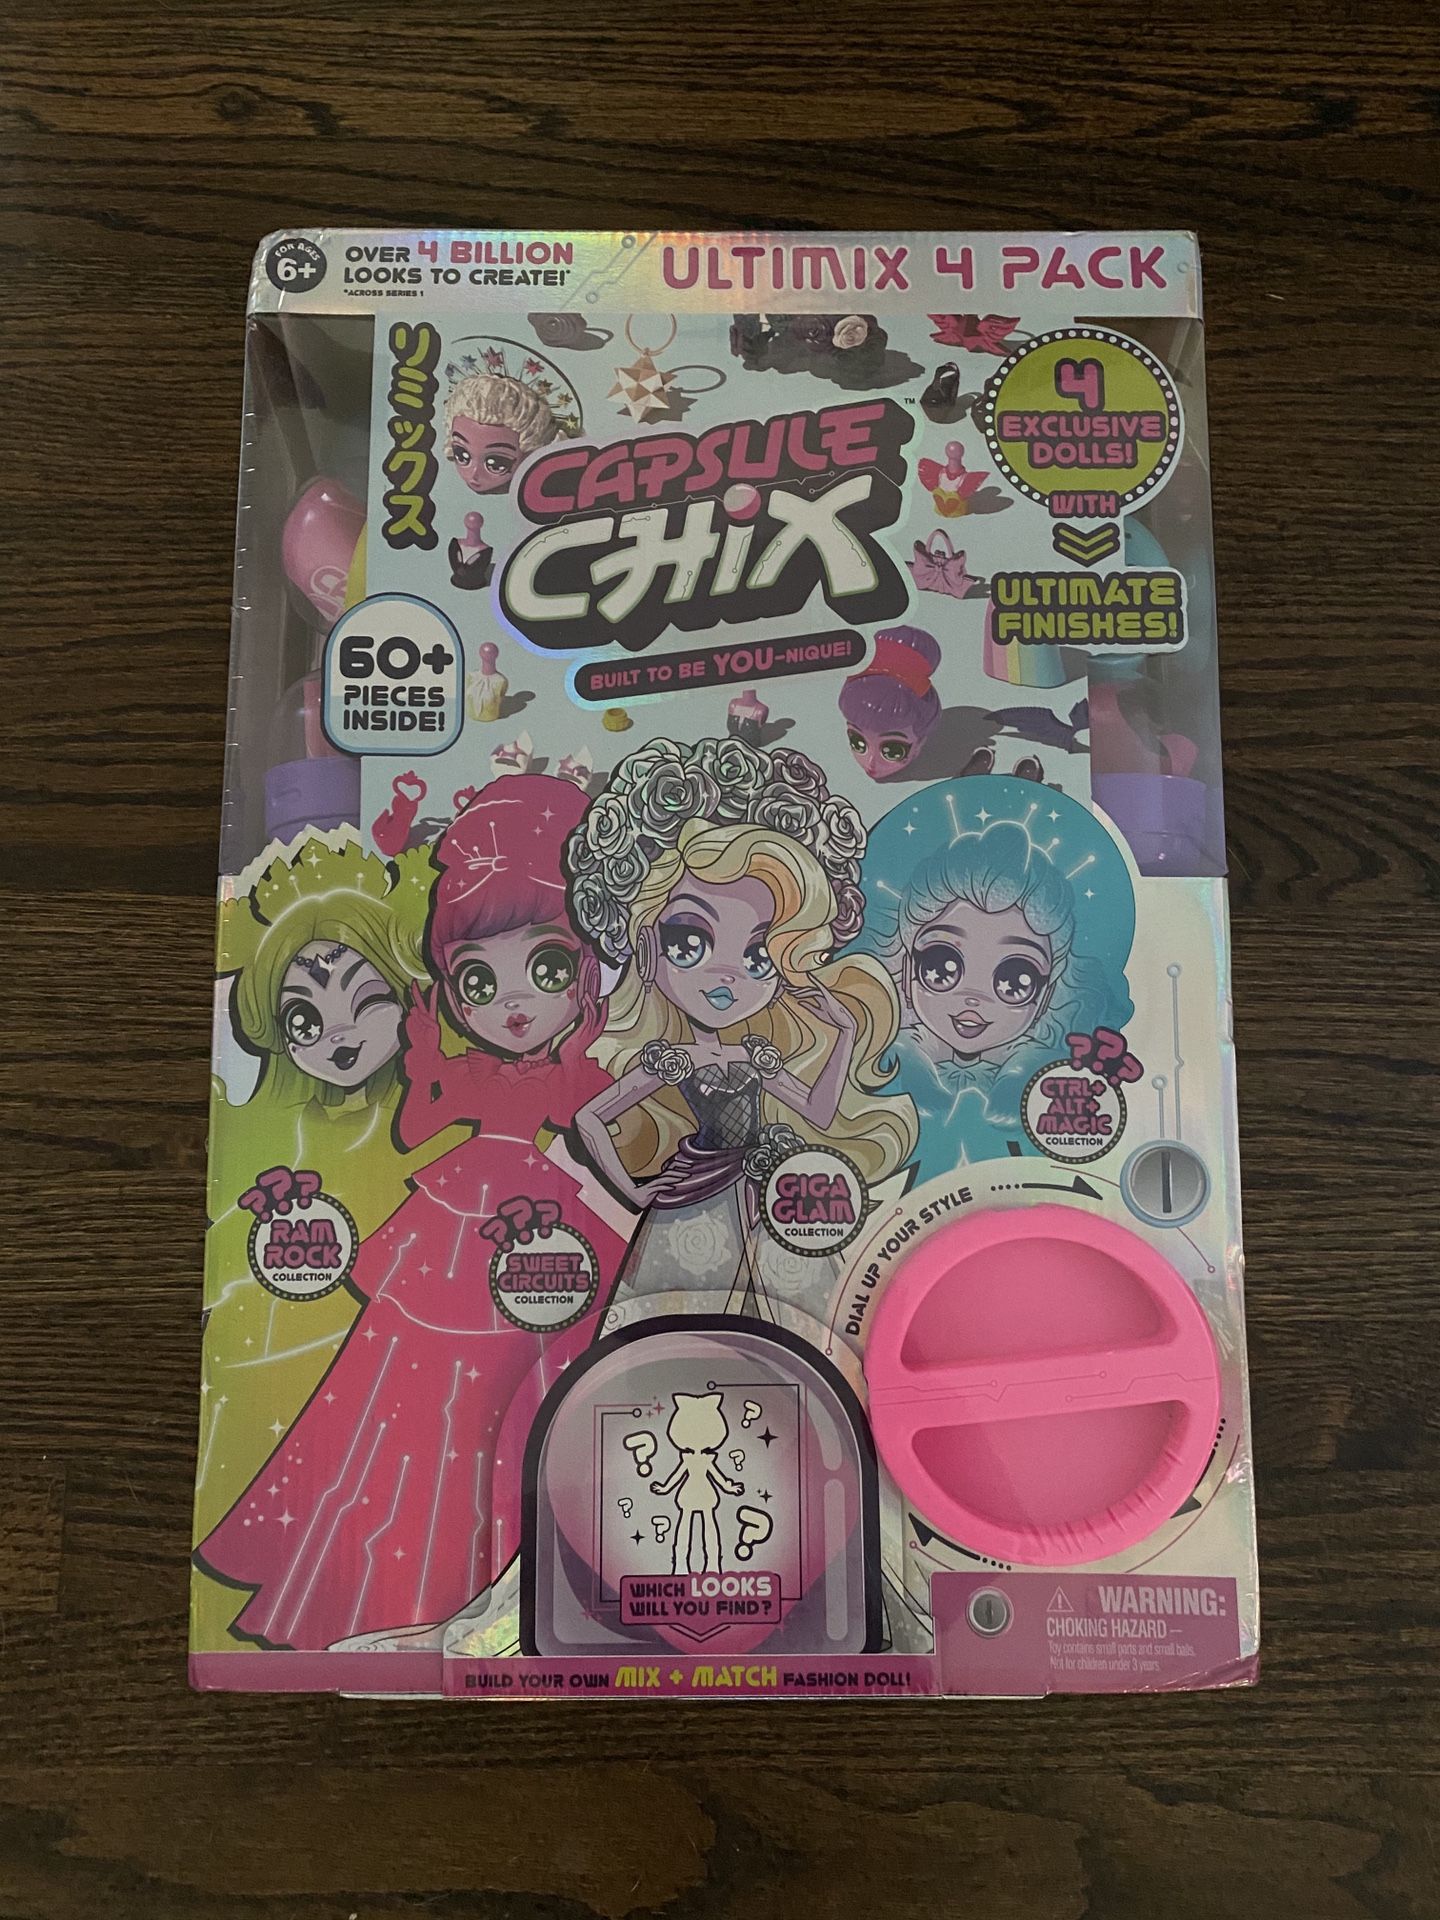 Capsule Chix Ultimaix 4 Pack Exclusive Dolls